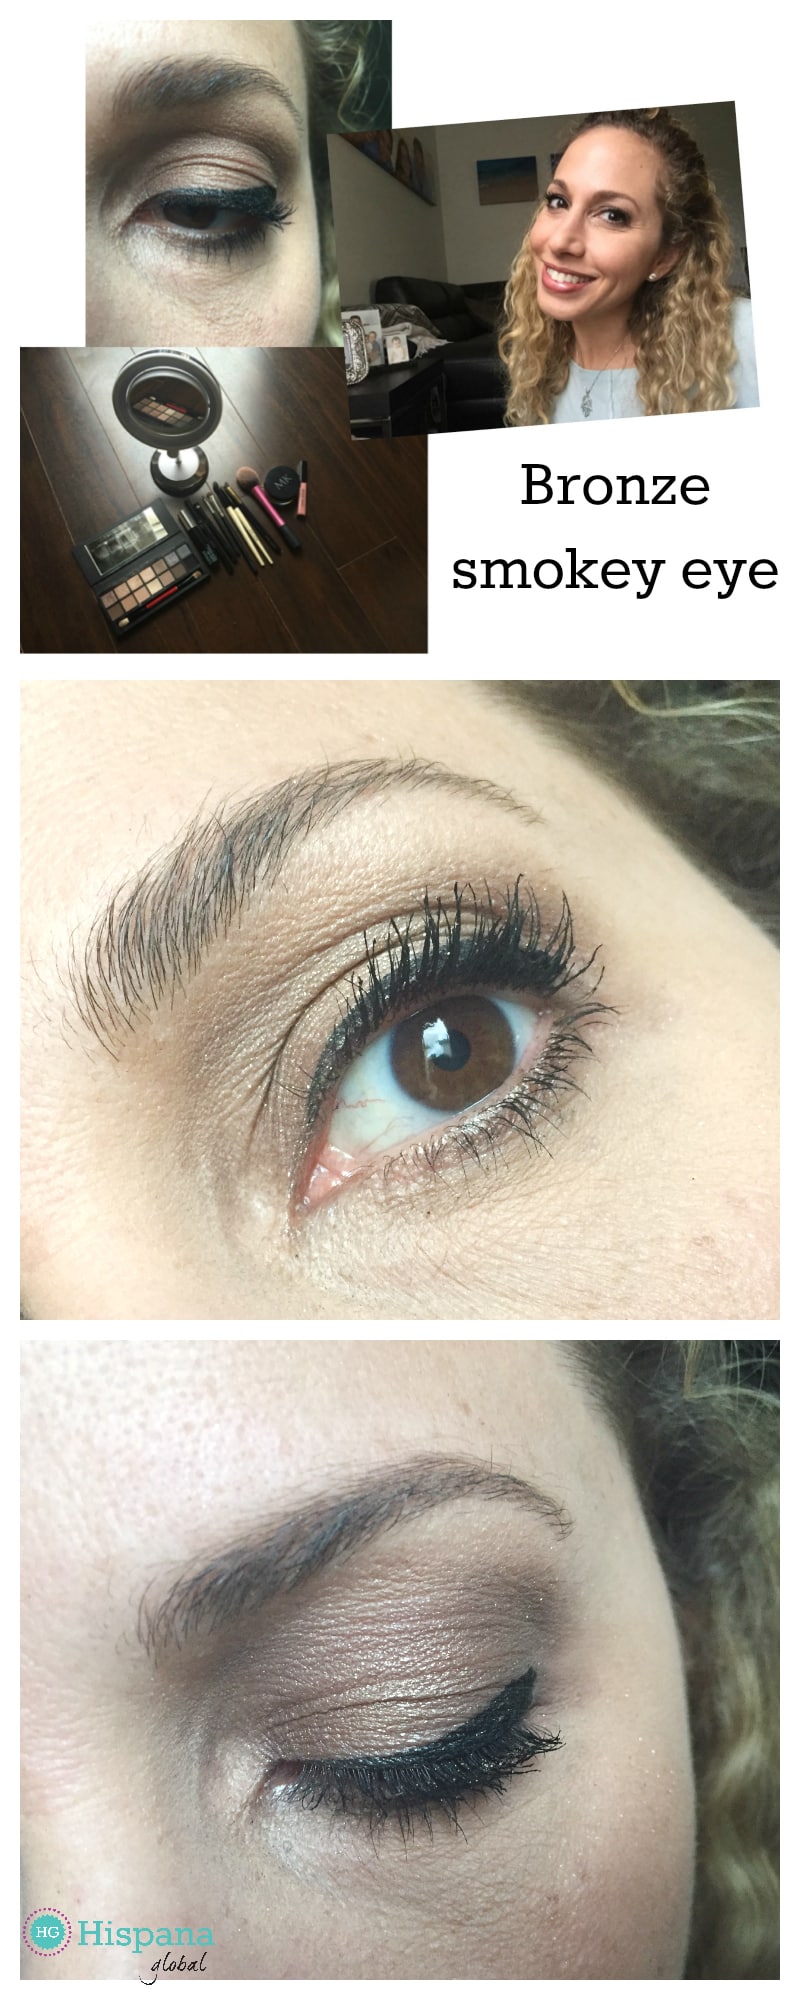 Bronze smokey eye makeup tutorial in just minutes